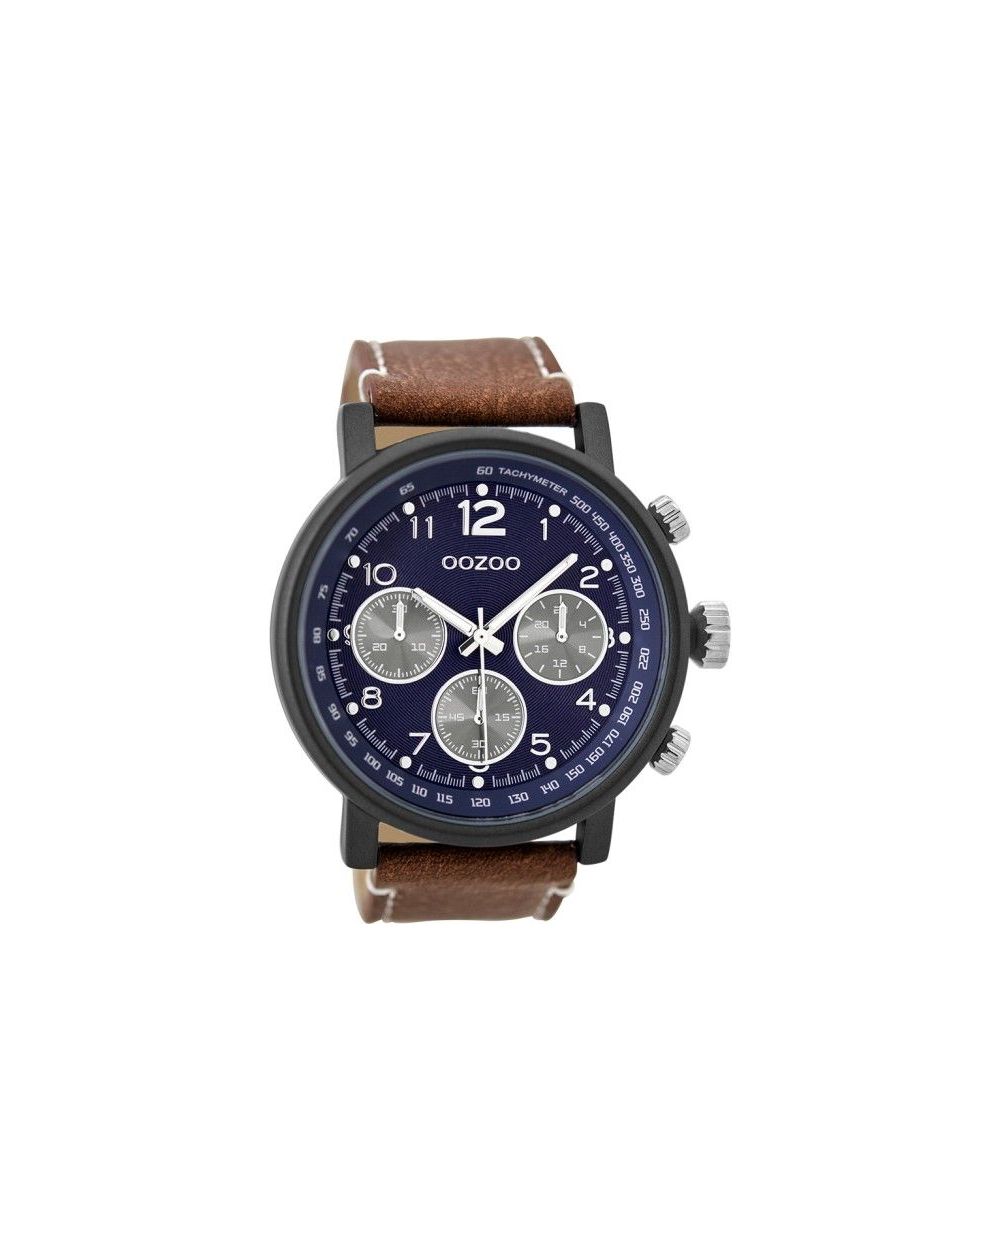 Montre Oozoo Timepieces C9456 brown/blue - Marque de montre Oozoo